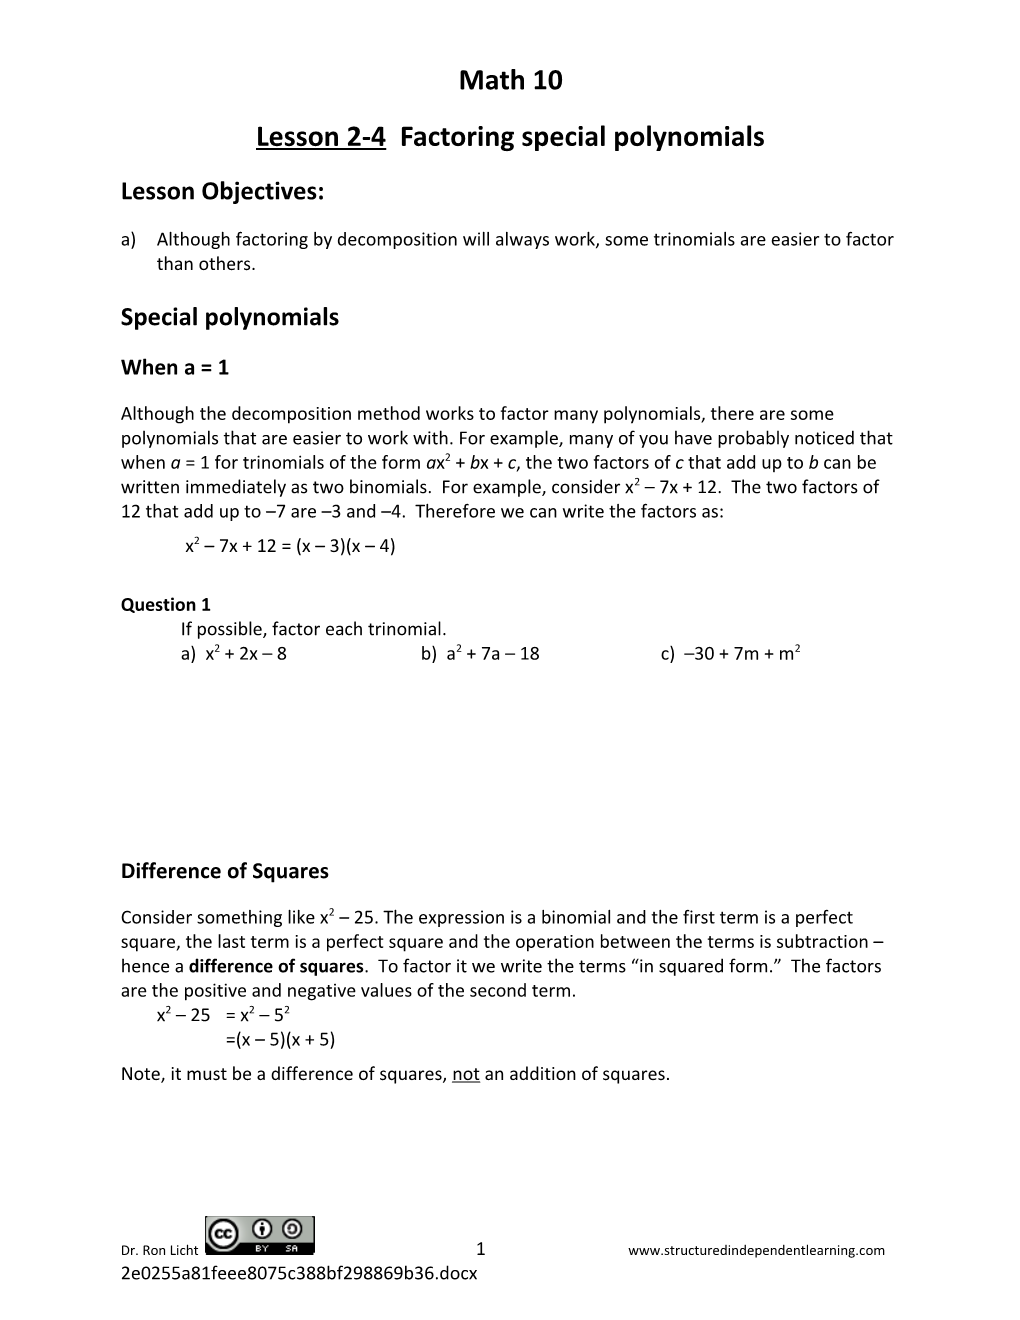 Lesson 2-4 Factoring Special Polynomials